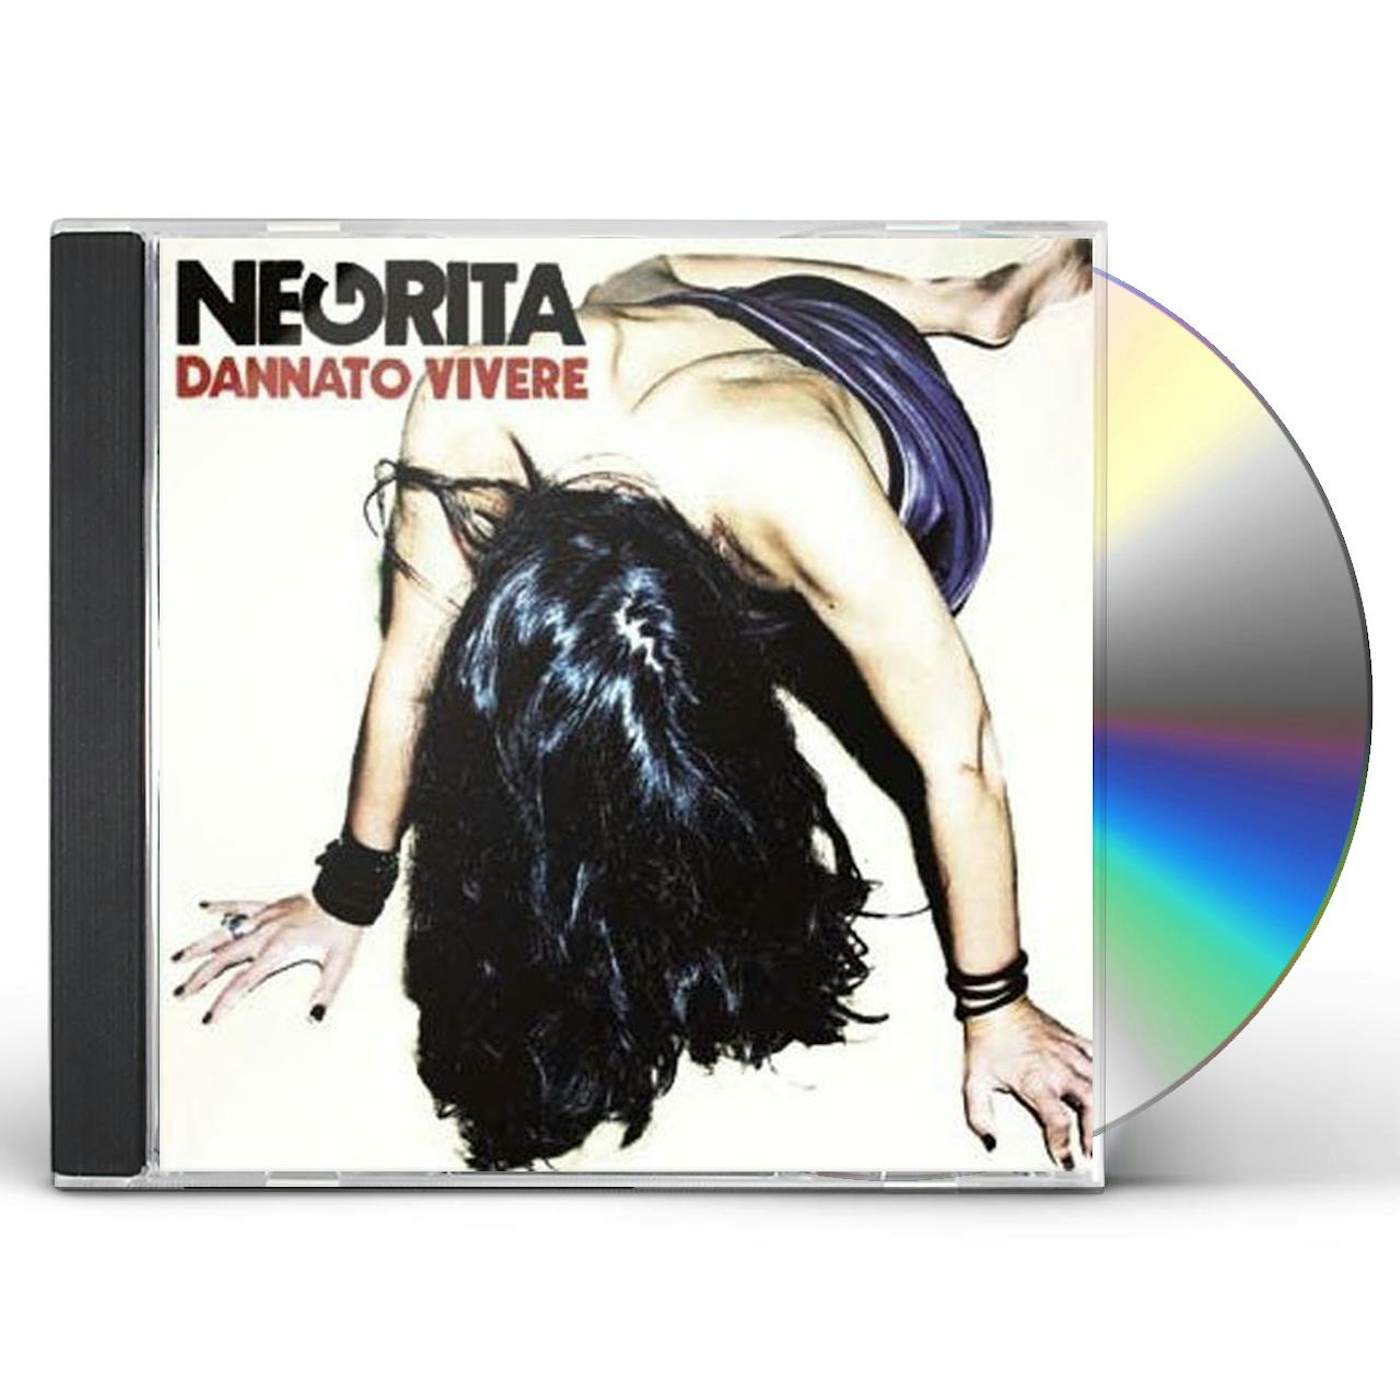 Negrita DANNATO VIVERE CD